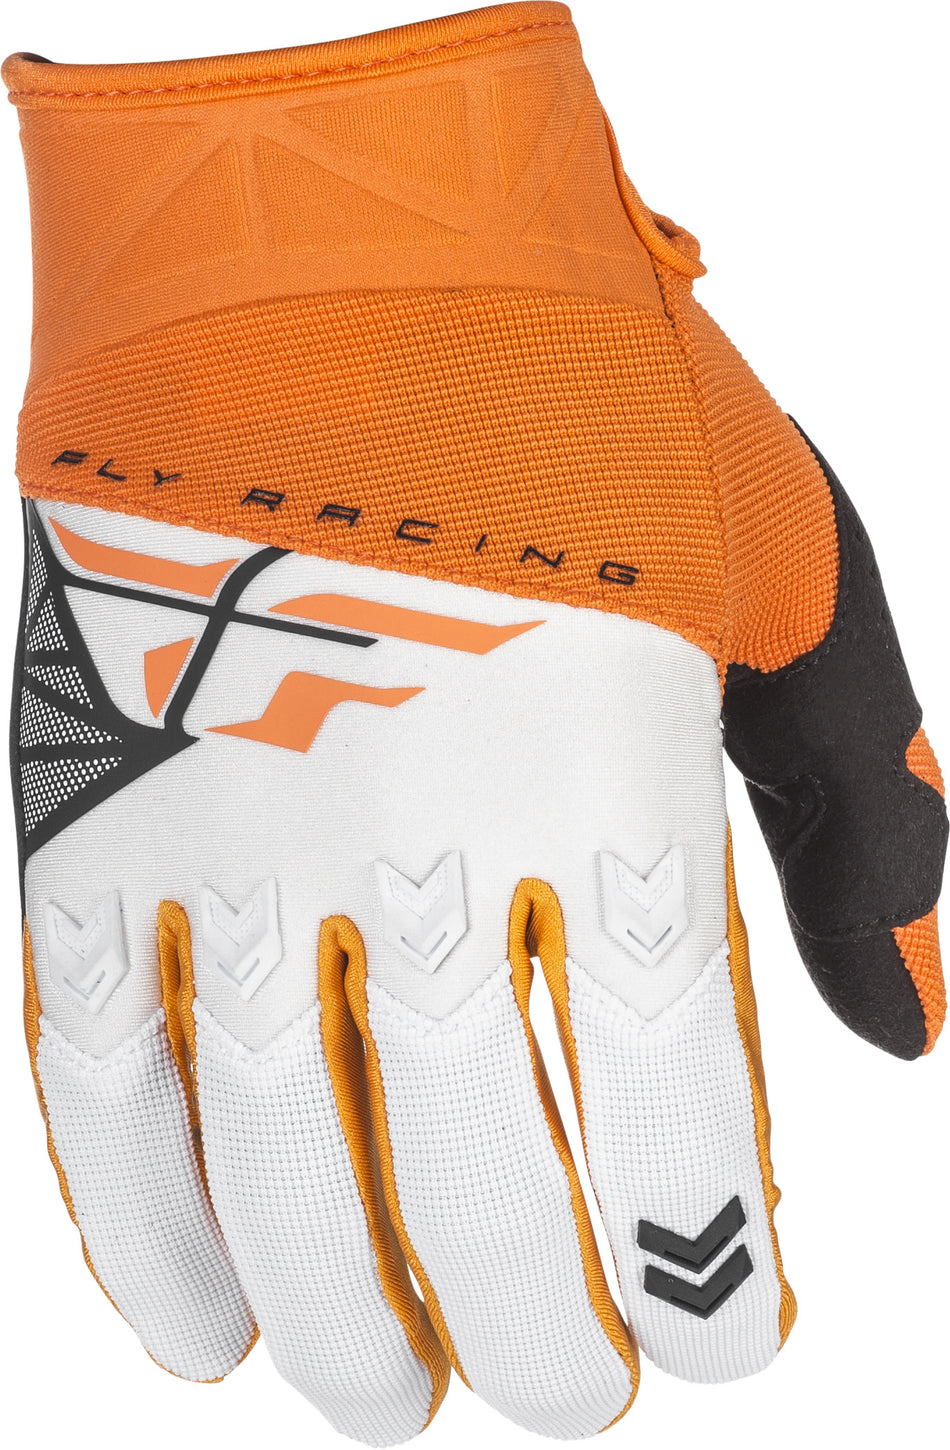 FLY RACING F-16 Gloves Orange/White Sz 10 371-91810